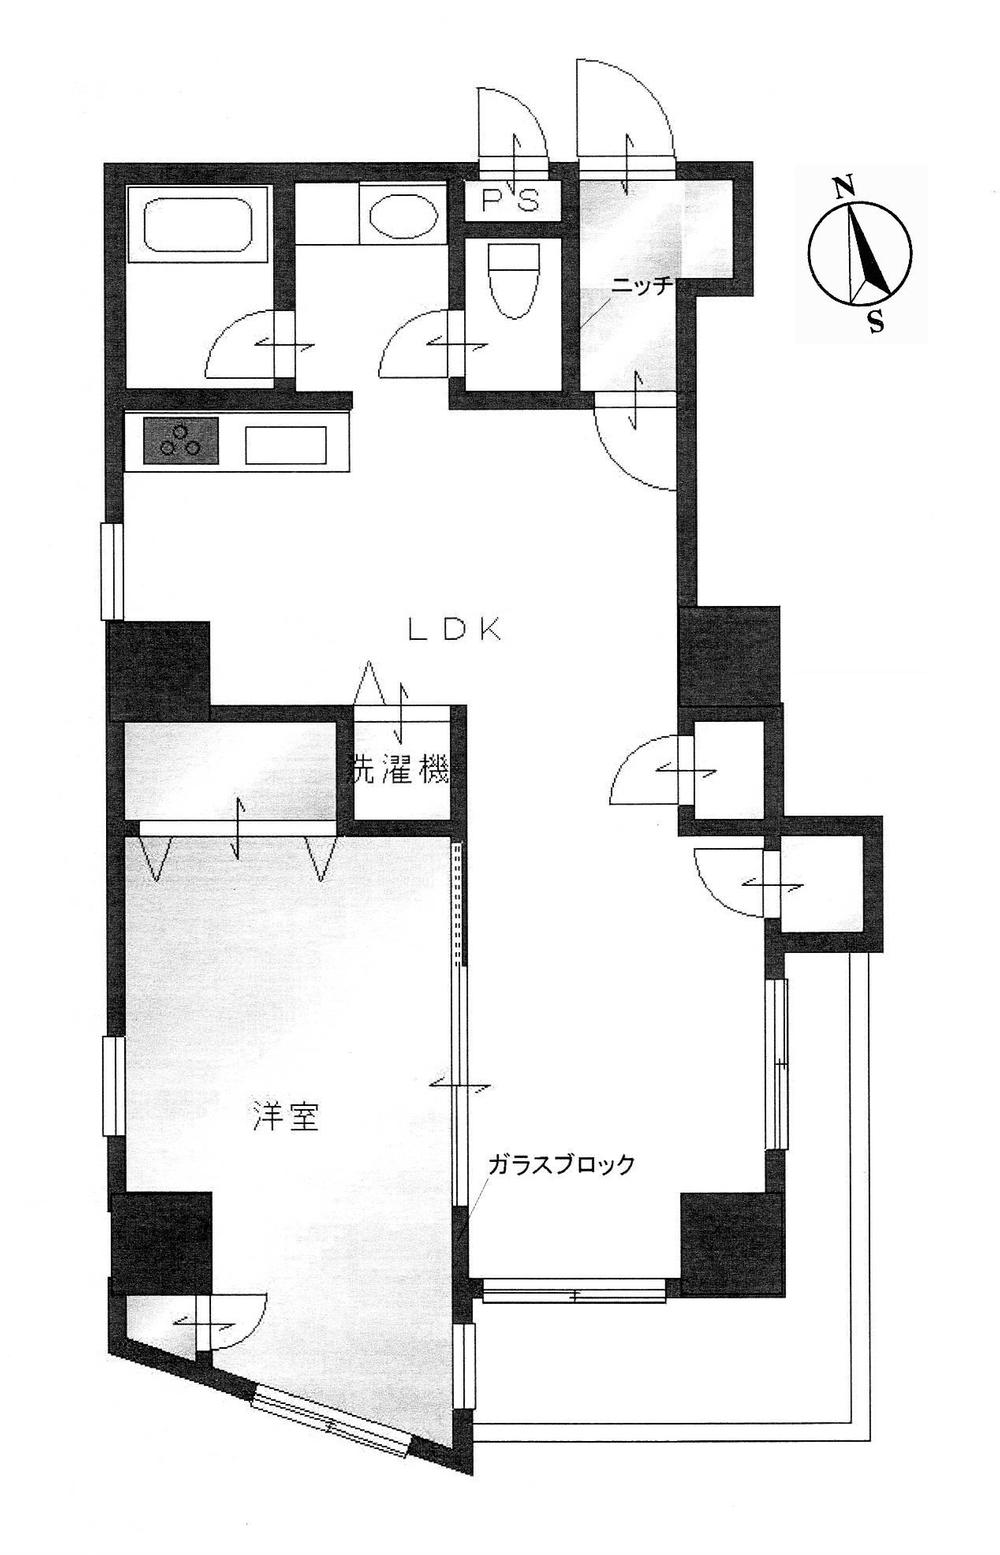 Floor plan. 1LDK, Price 18 million yen, Occupied area 46.01 sq m , Balcony area 4.95 sq m